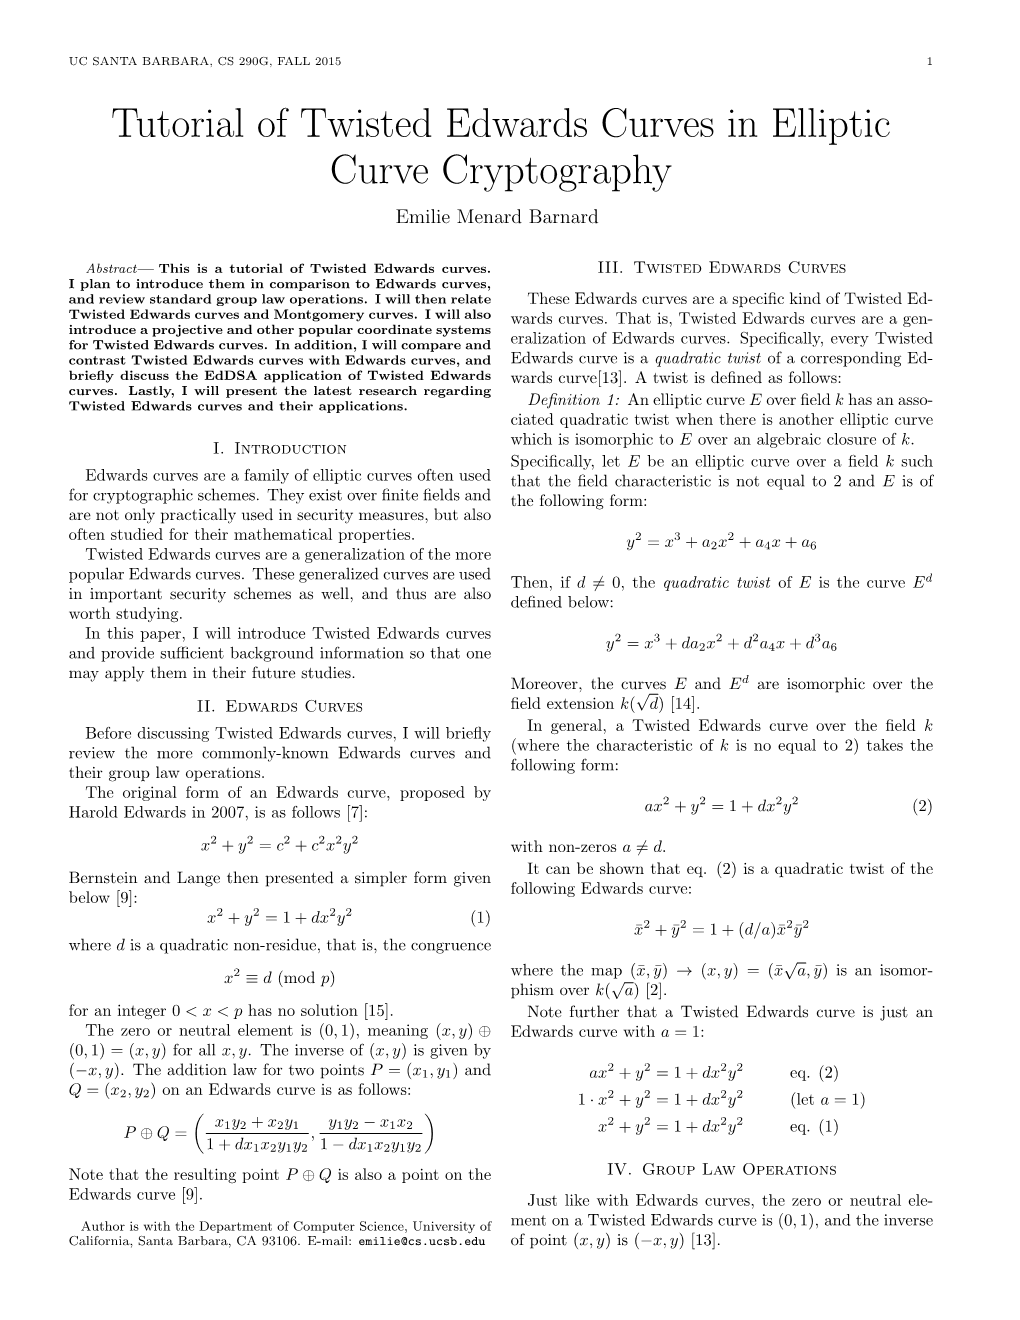 Tutorial of Twisted Edwards Curves in Elliptic Curve Cryptography Emilie Menard Barnard